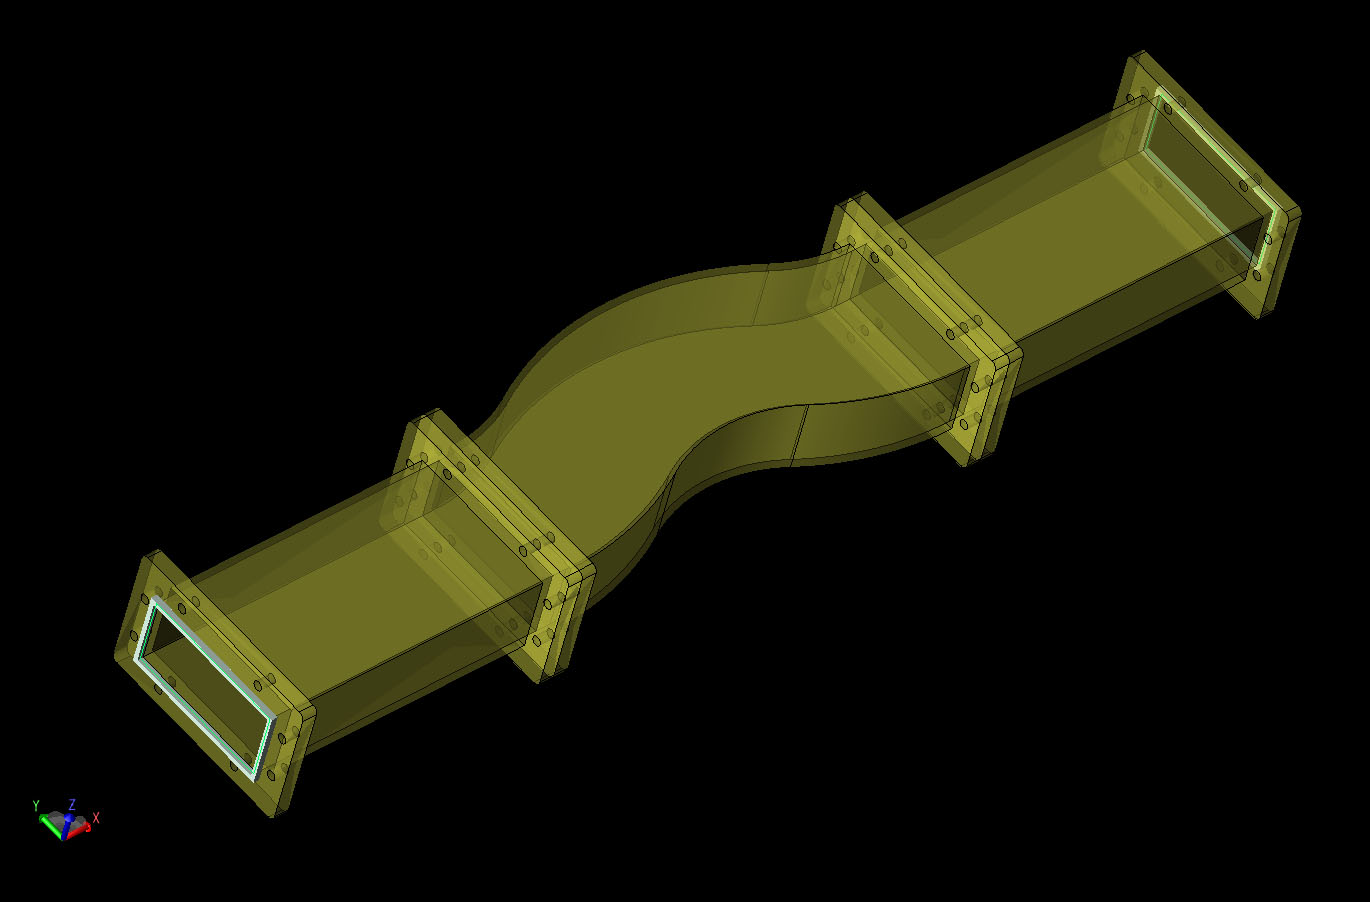 Abbildung 6: CAD-Geometrie des dreifach gekrümmten Hohlleitermoduskonverters.